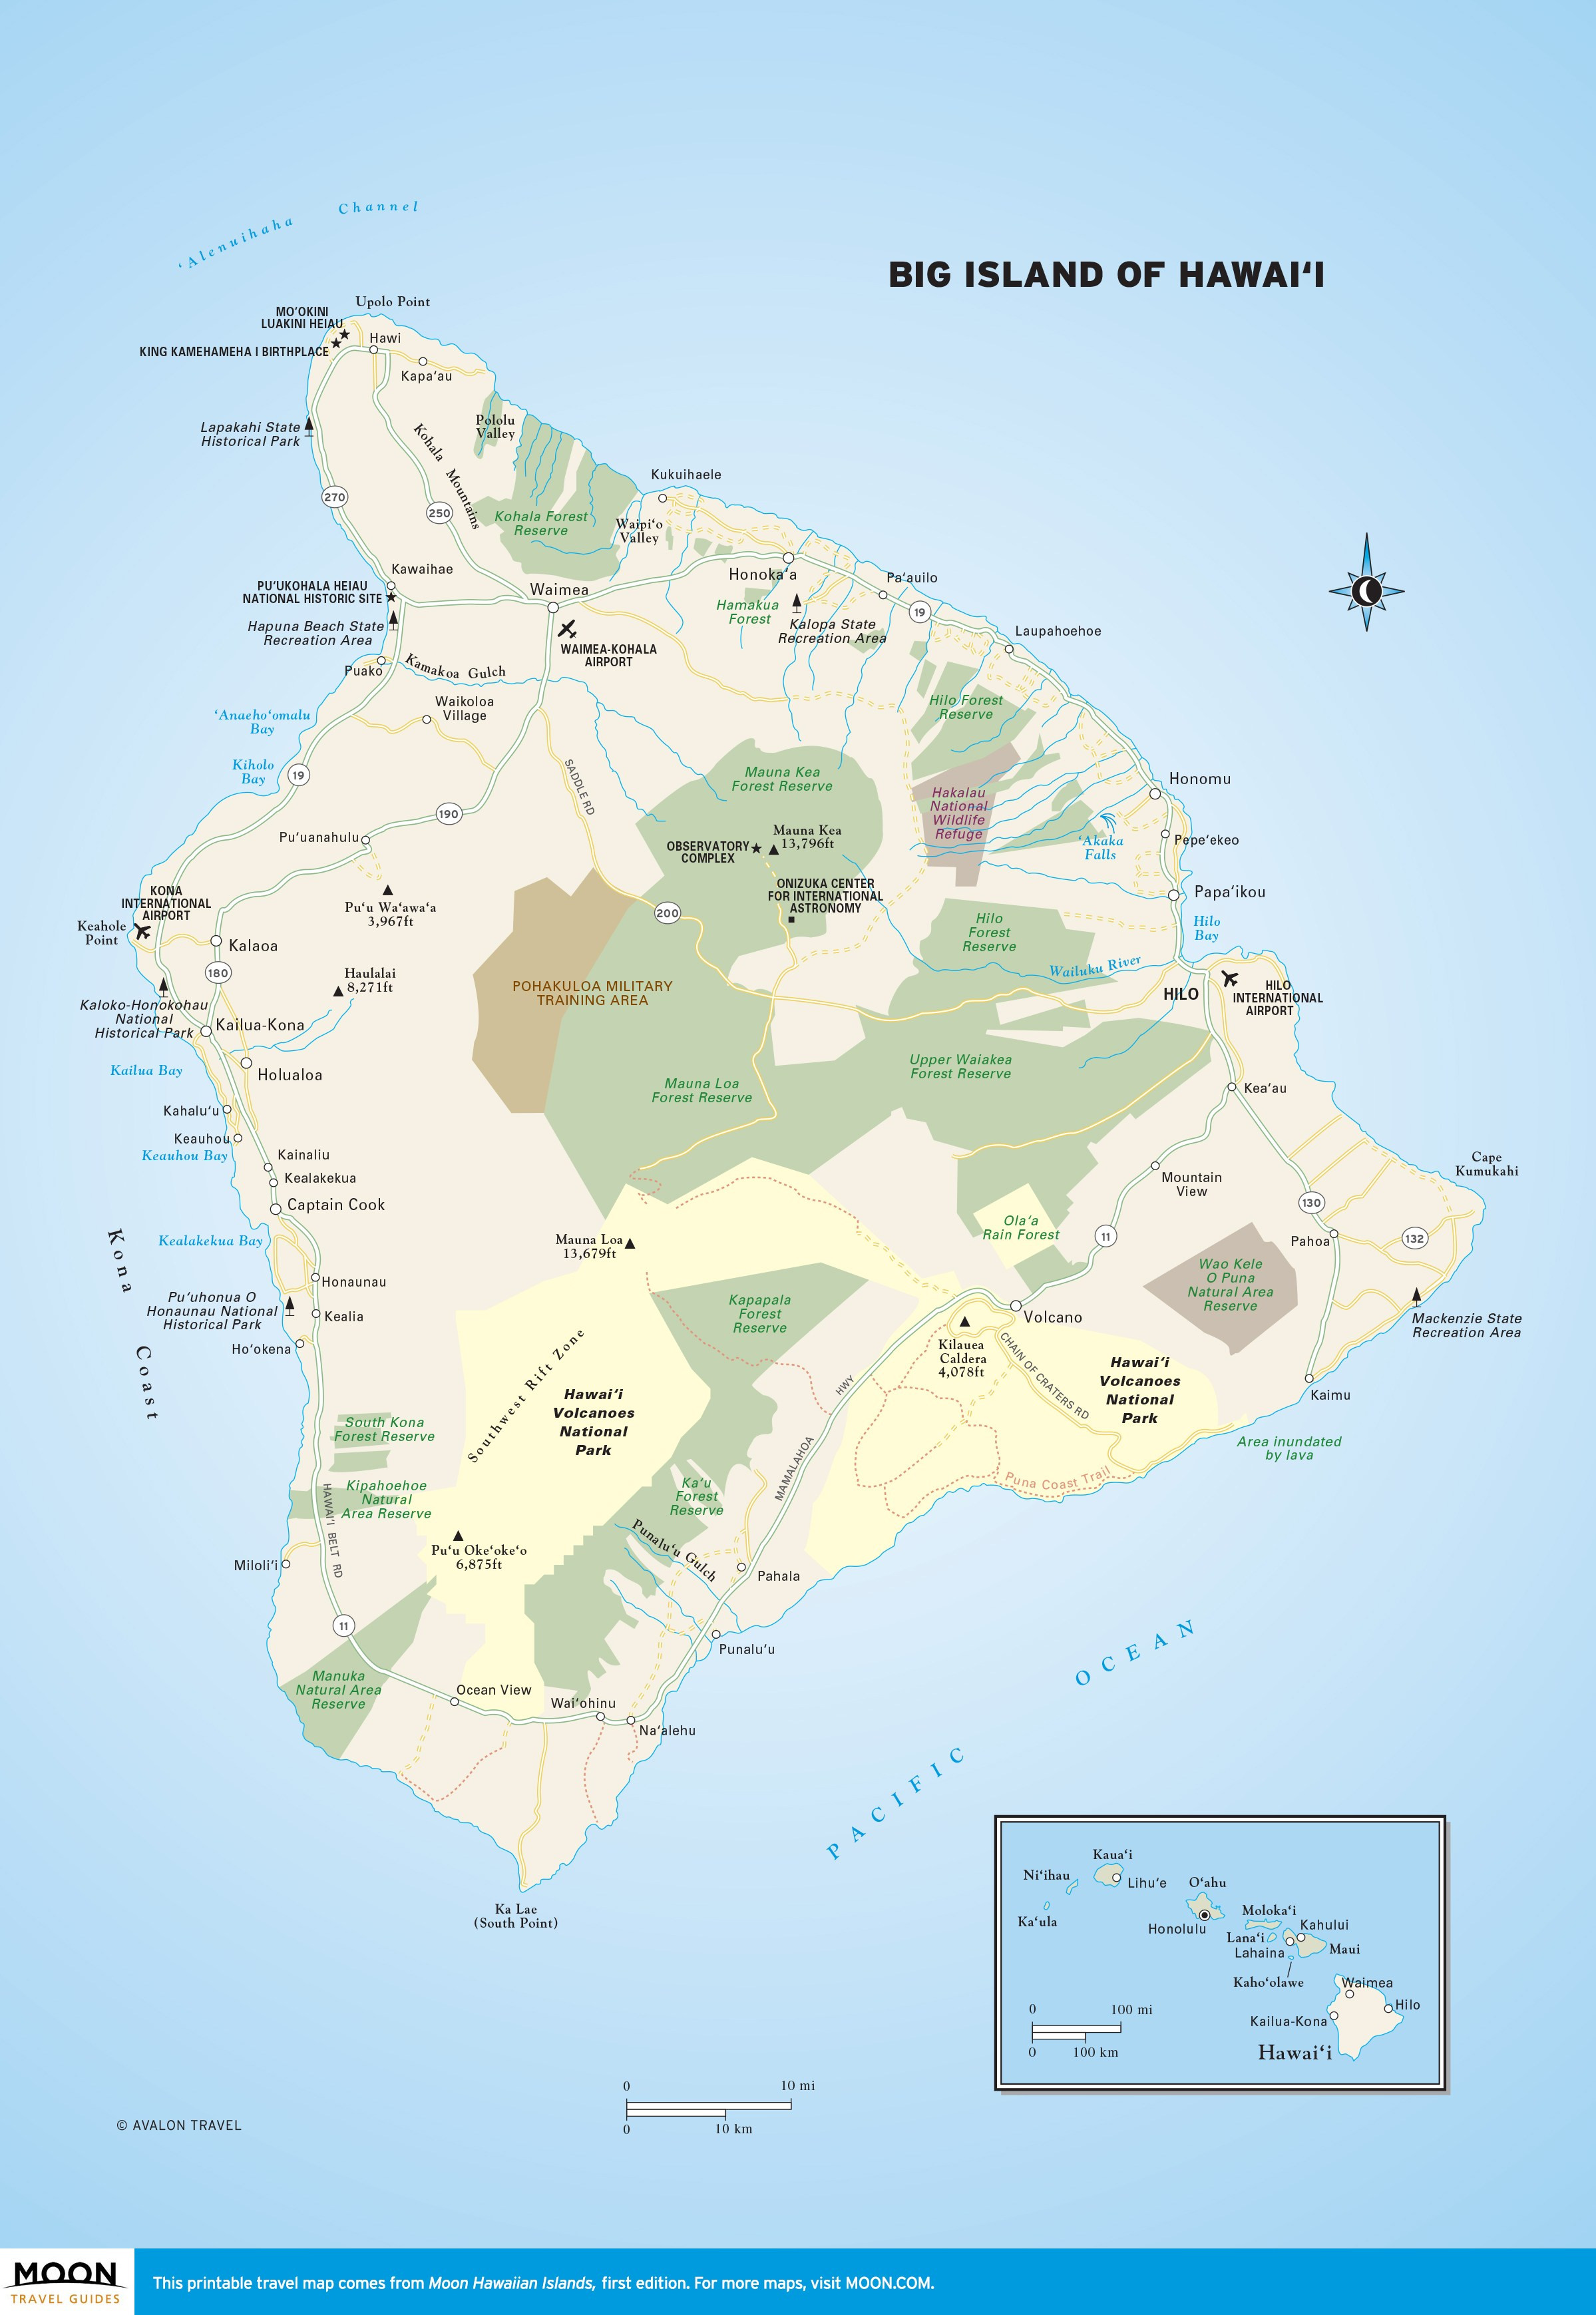 Printable Travel Maps of the Big Island of Hawaii